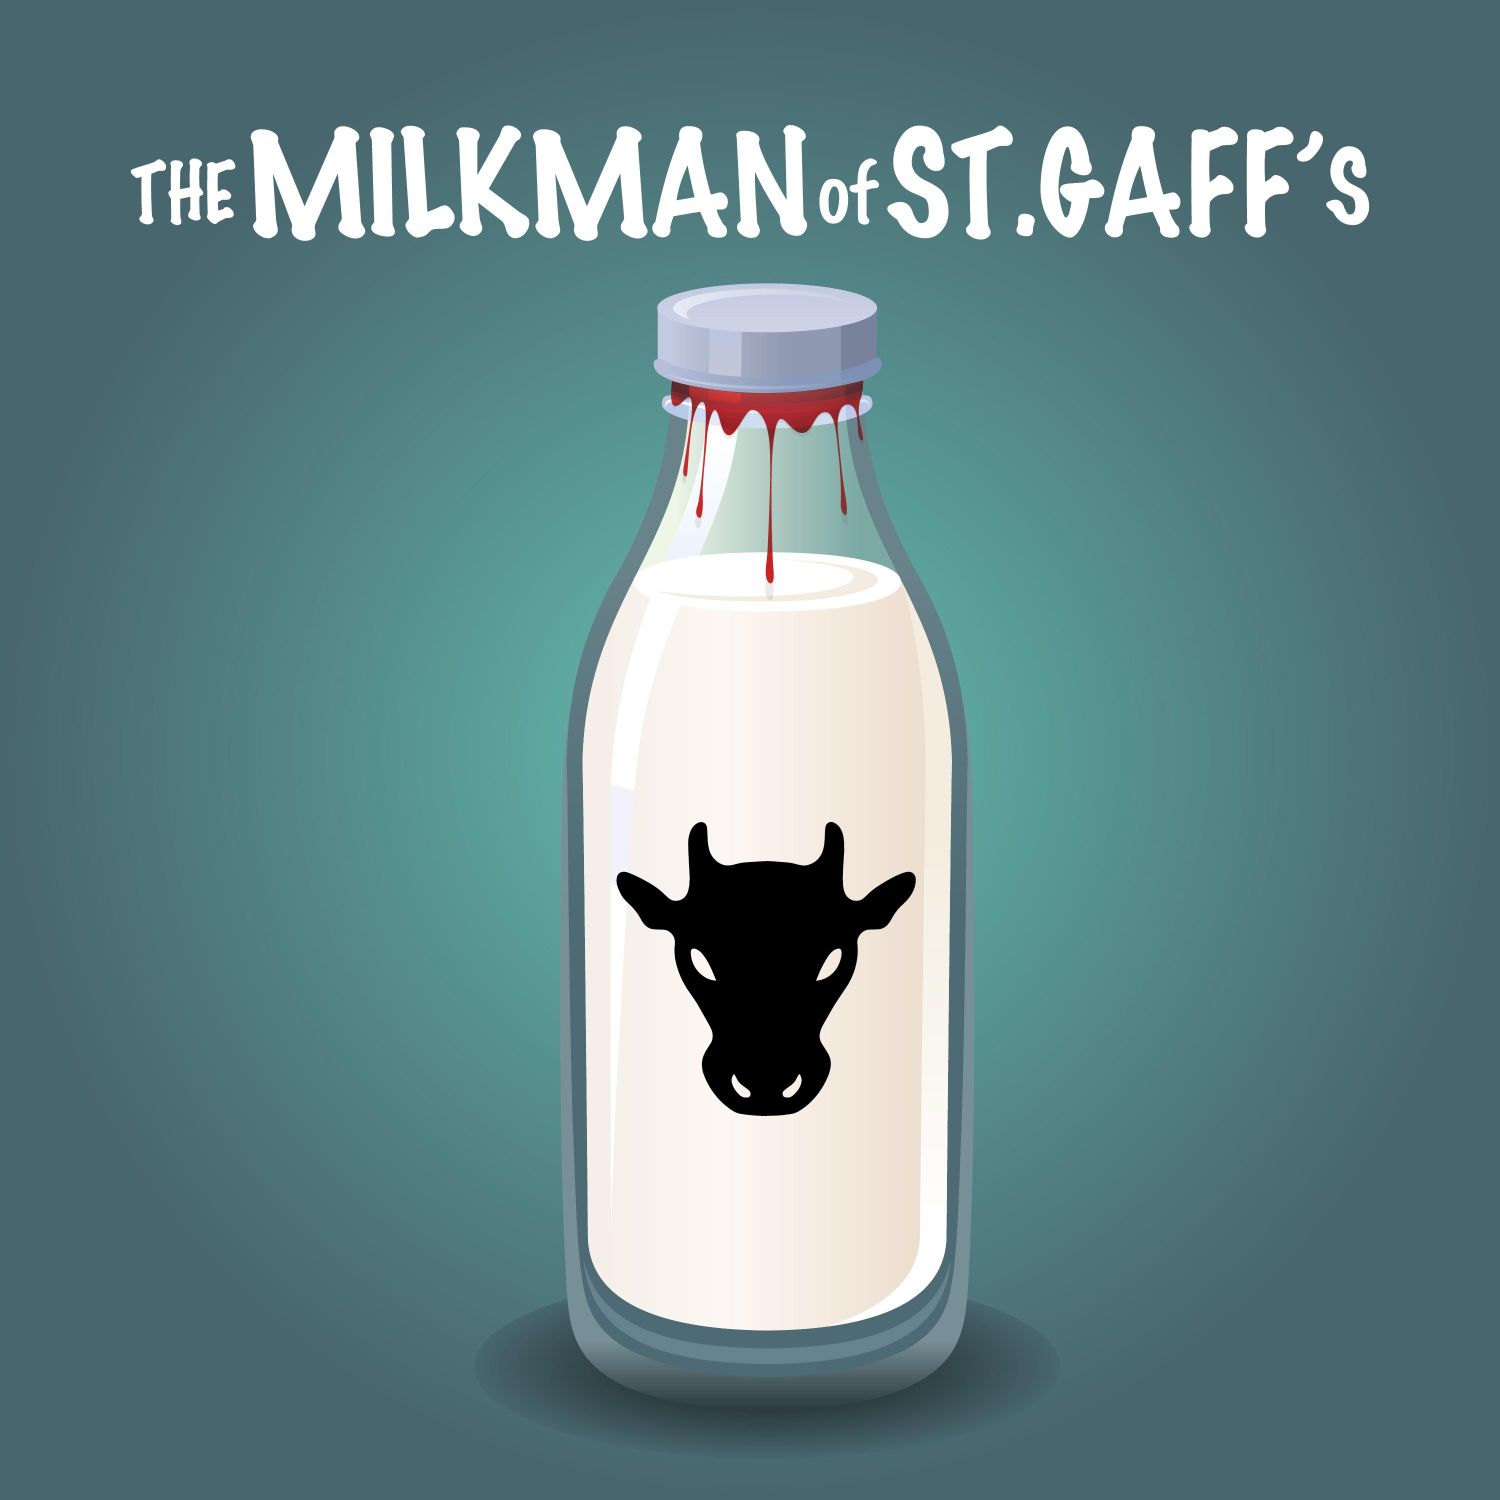 The Milkman of St. Gaff's Album Art